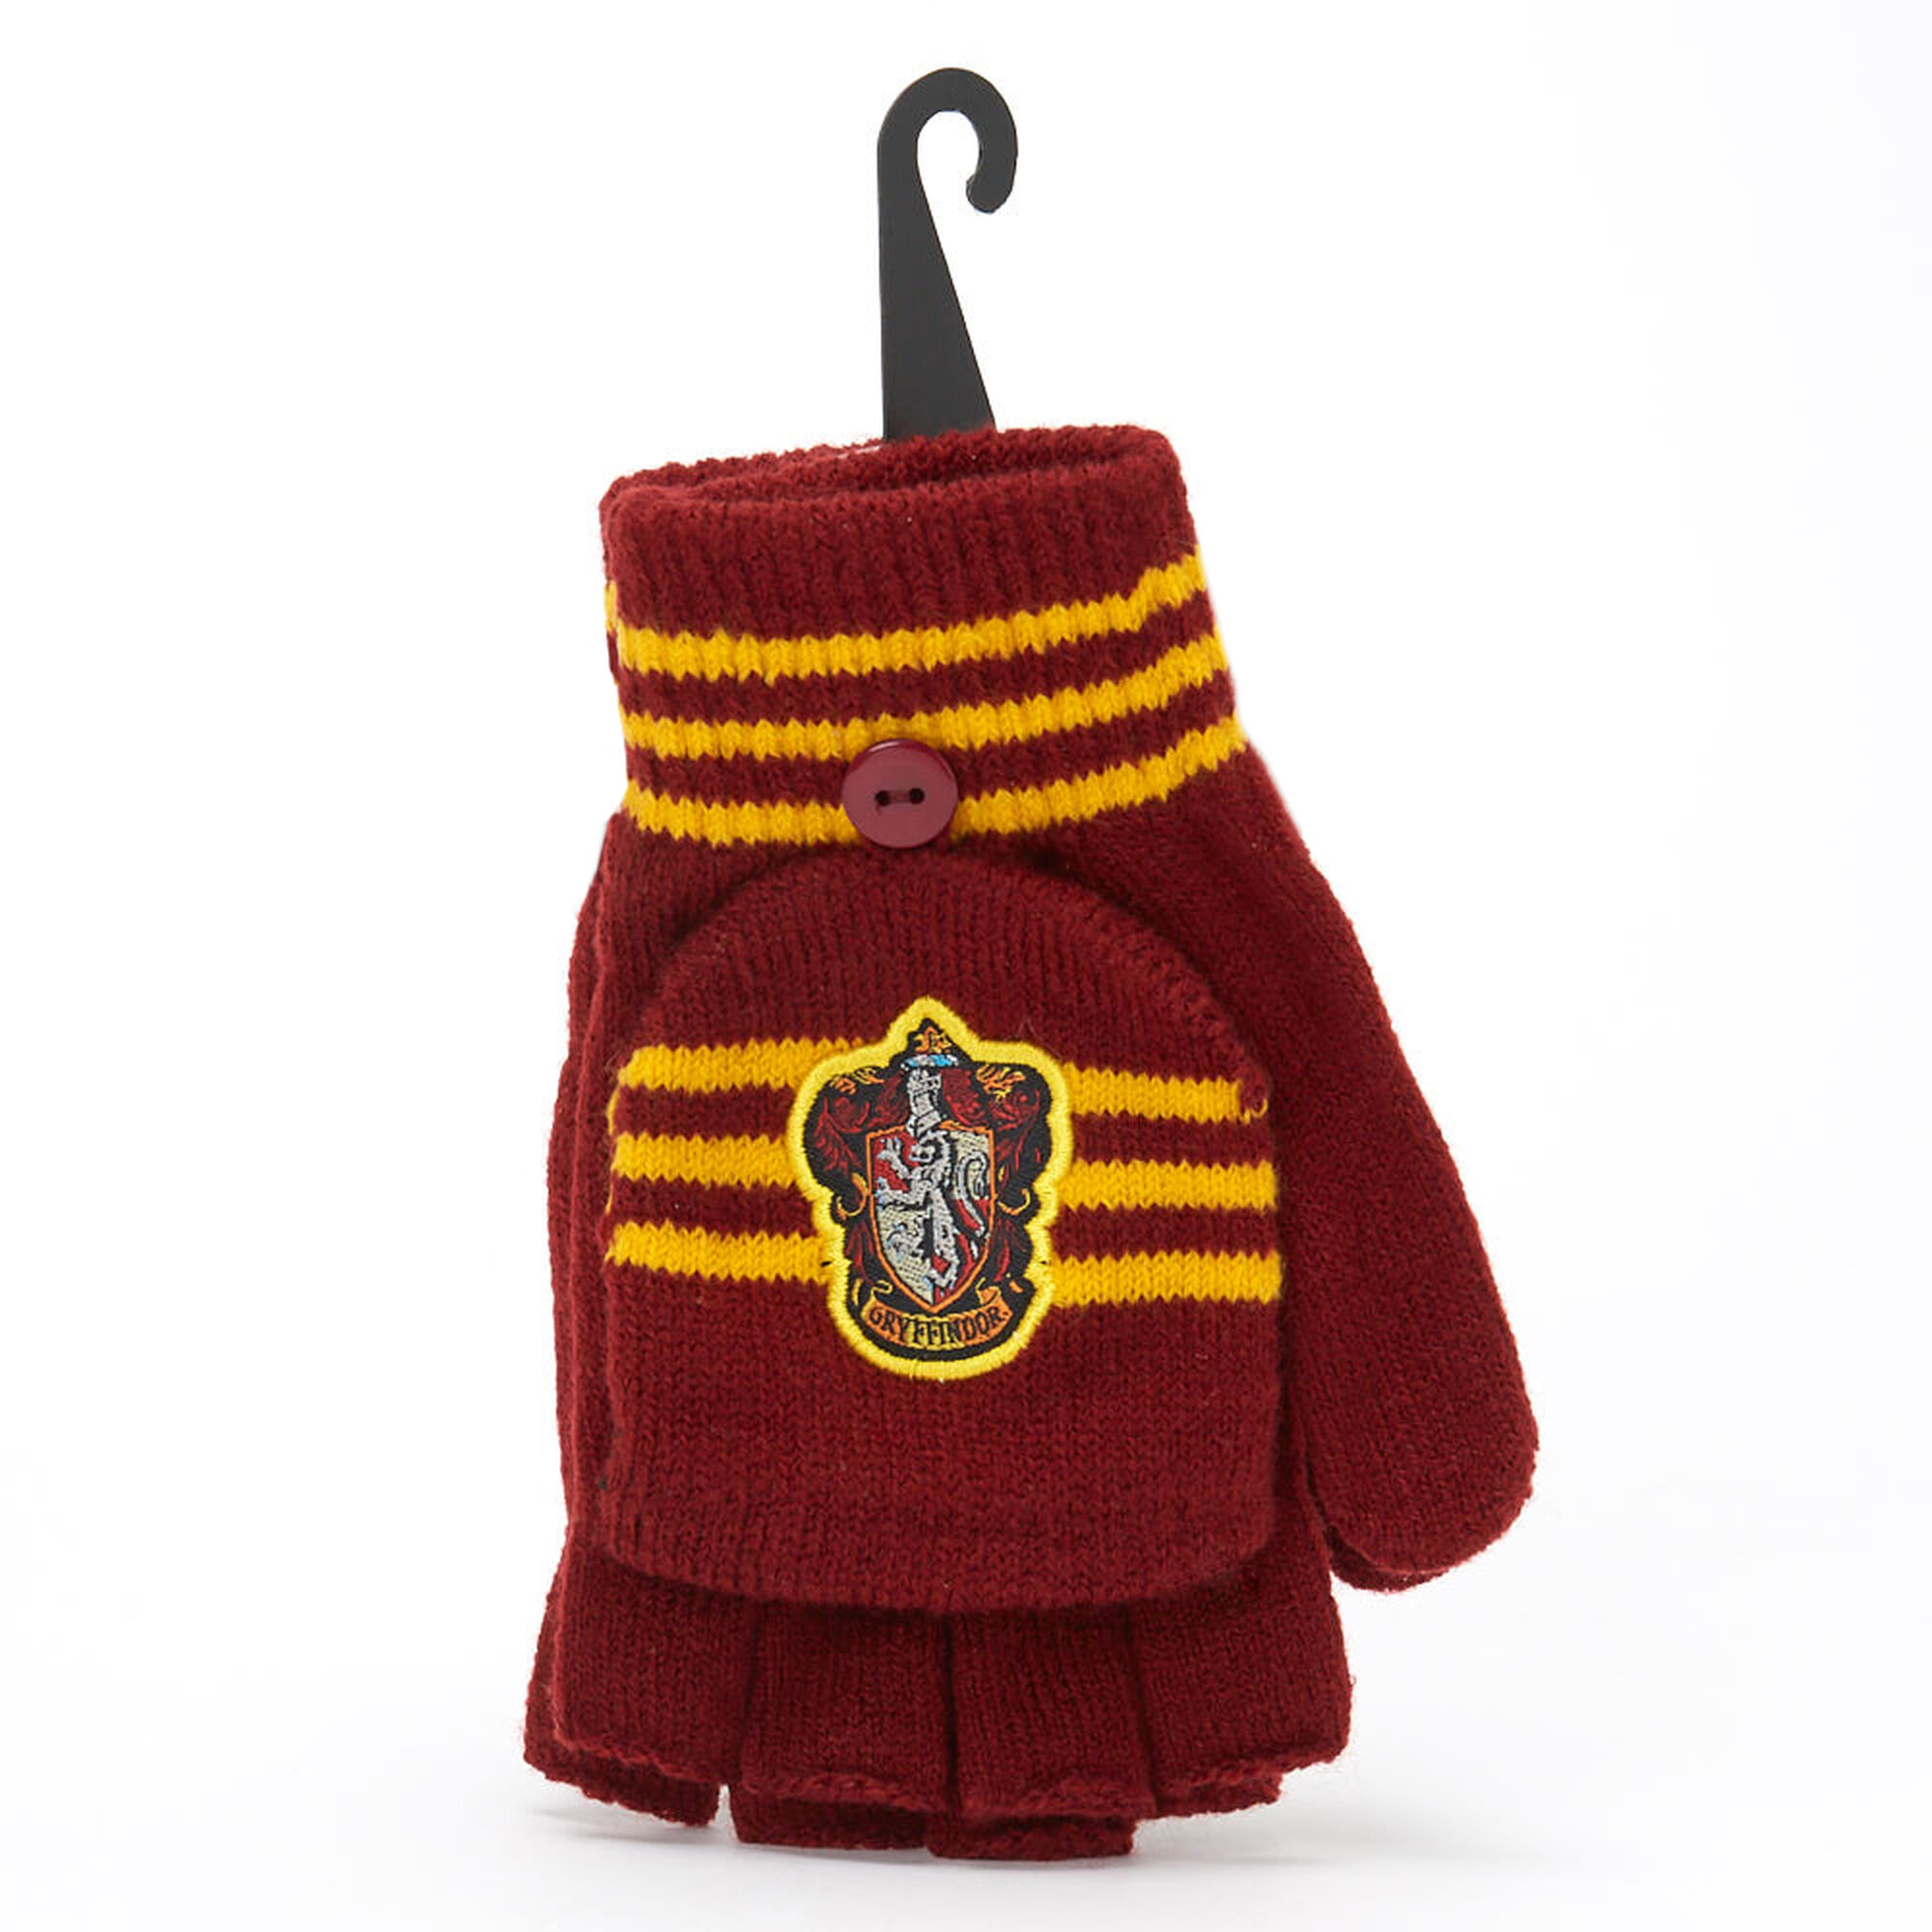 View Claires Harry Potter Gryffindor Fingerless Gloves With Mitten Flap Burgundy information